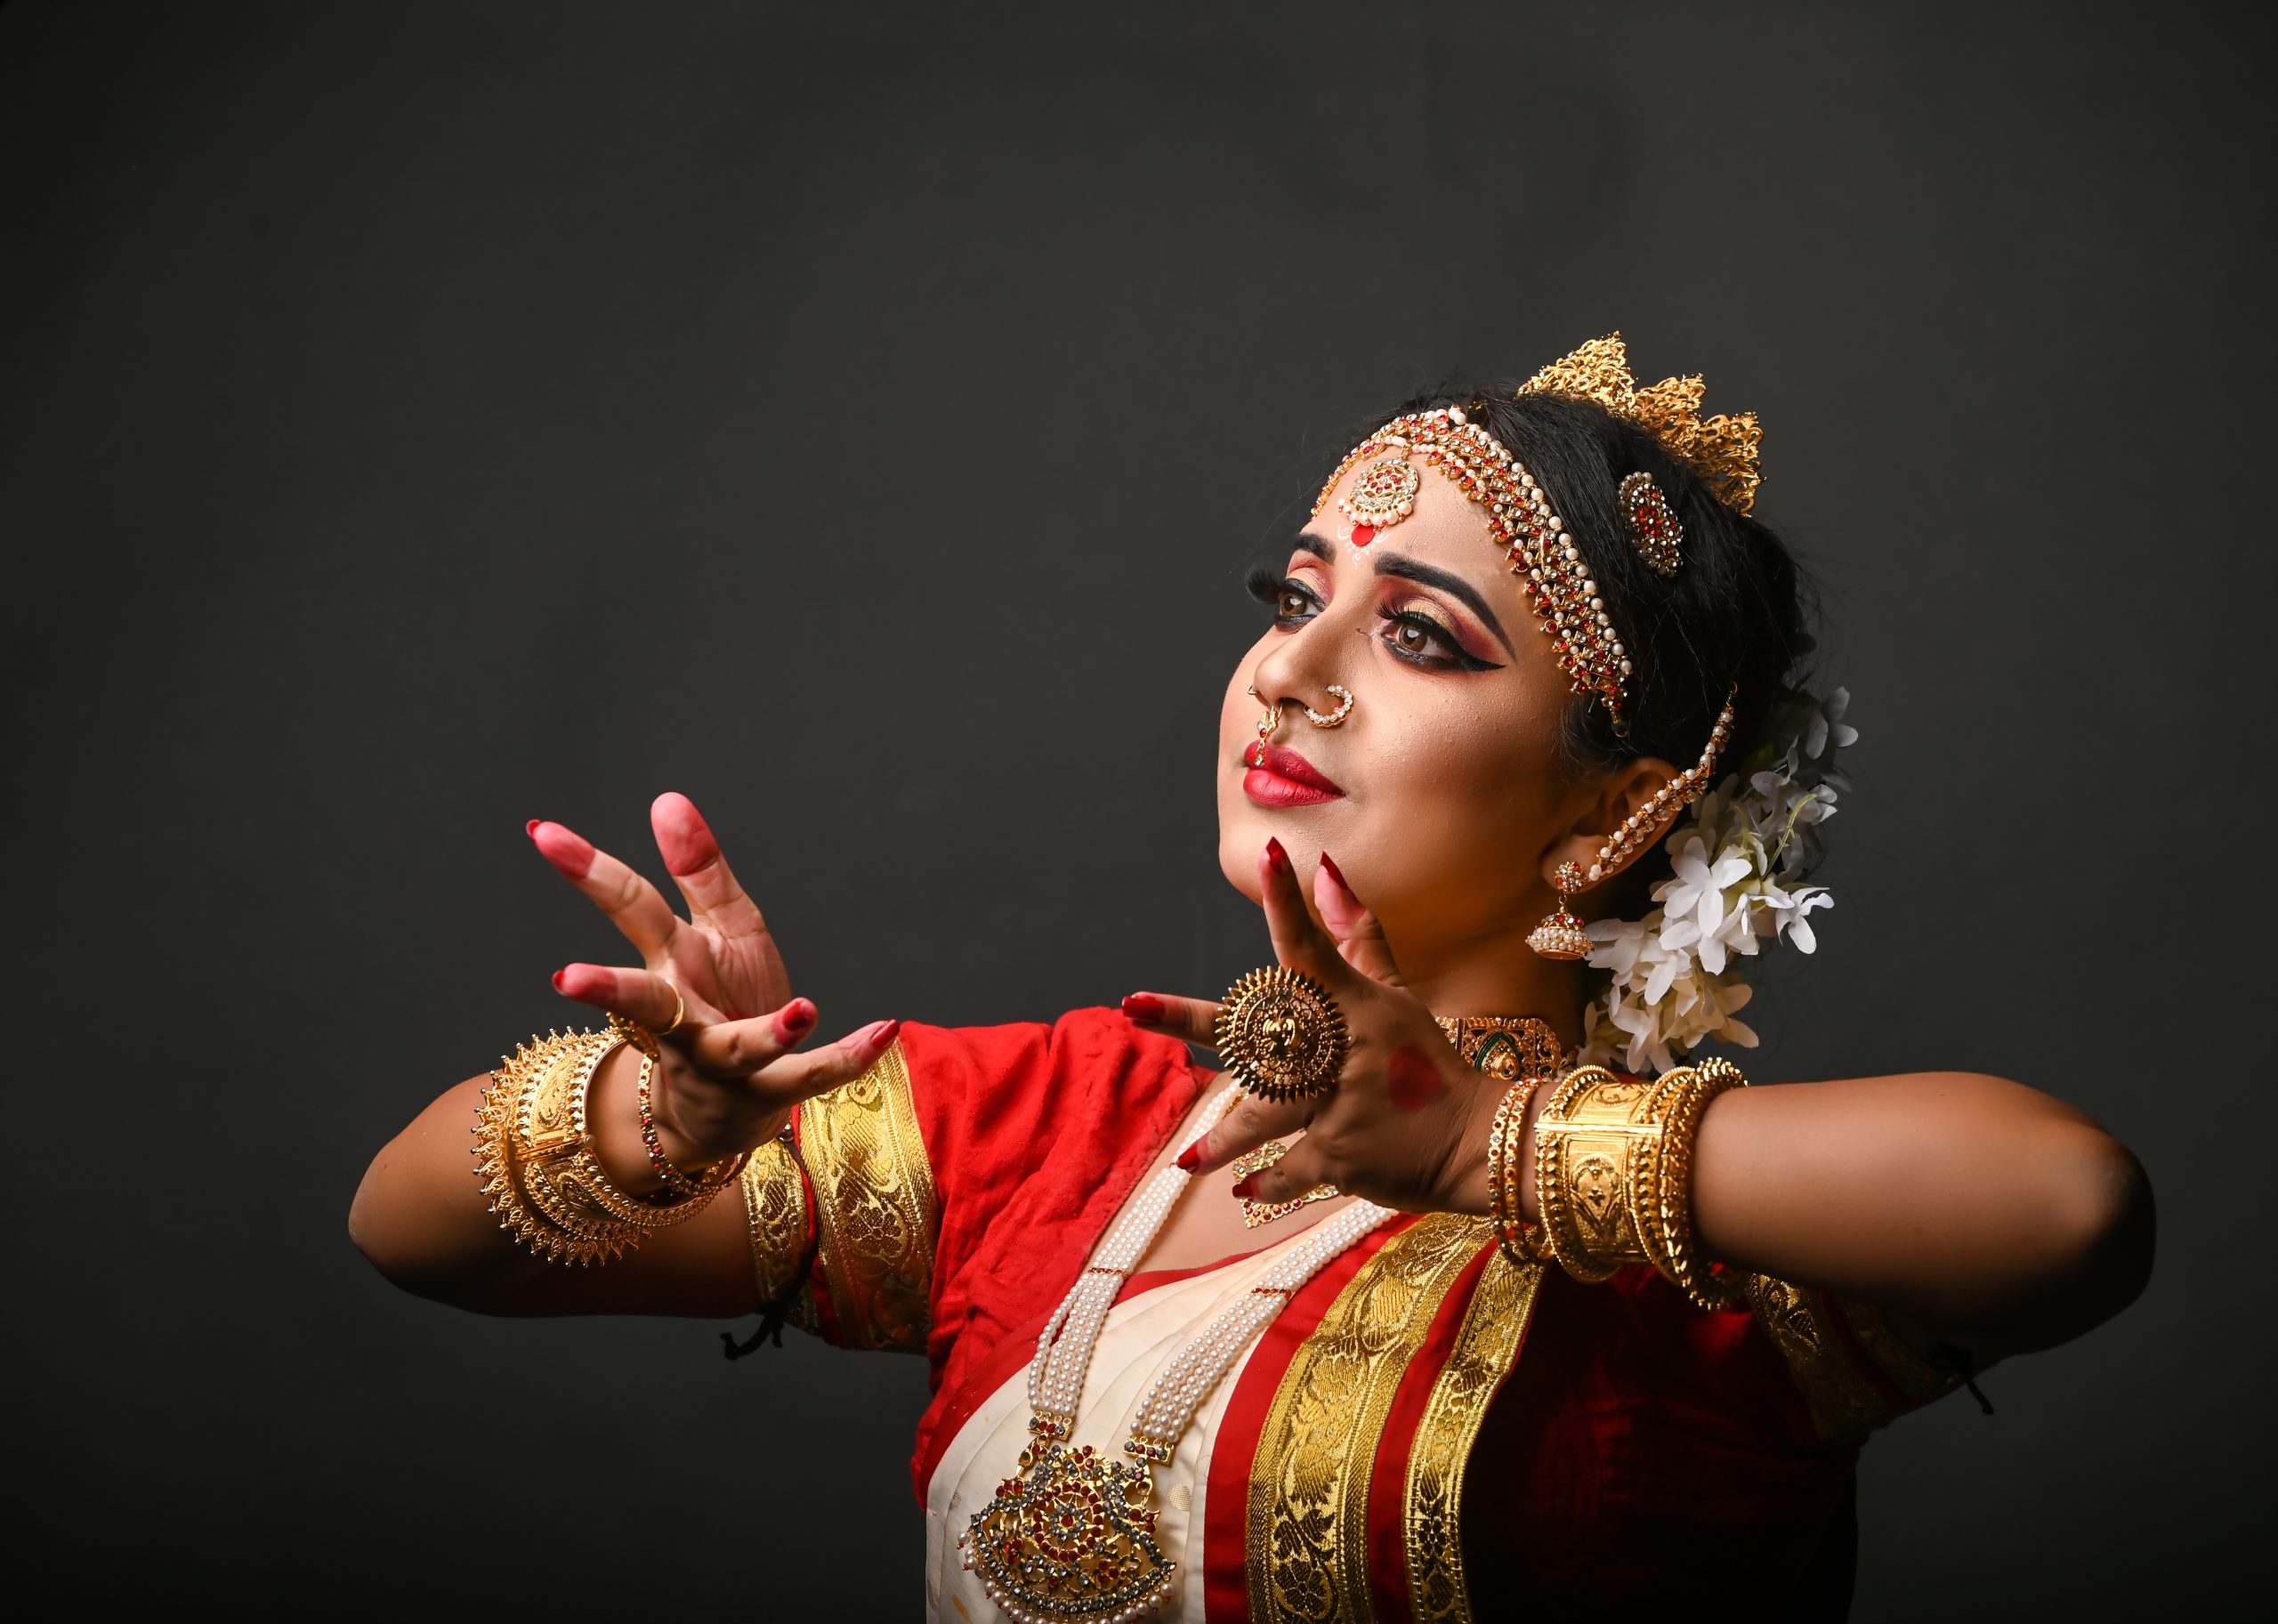 Indian classical dancer